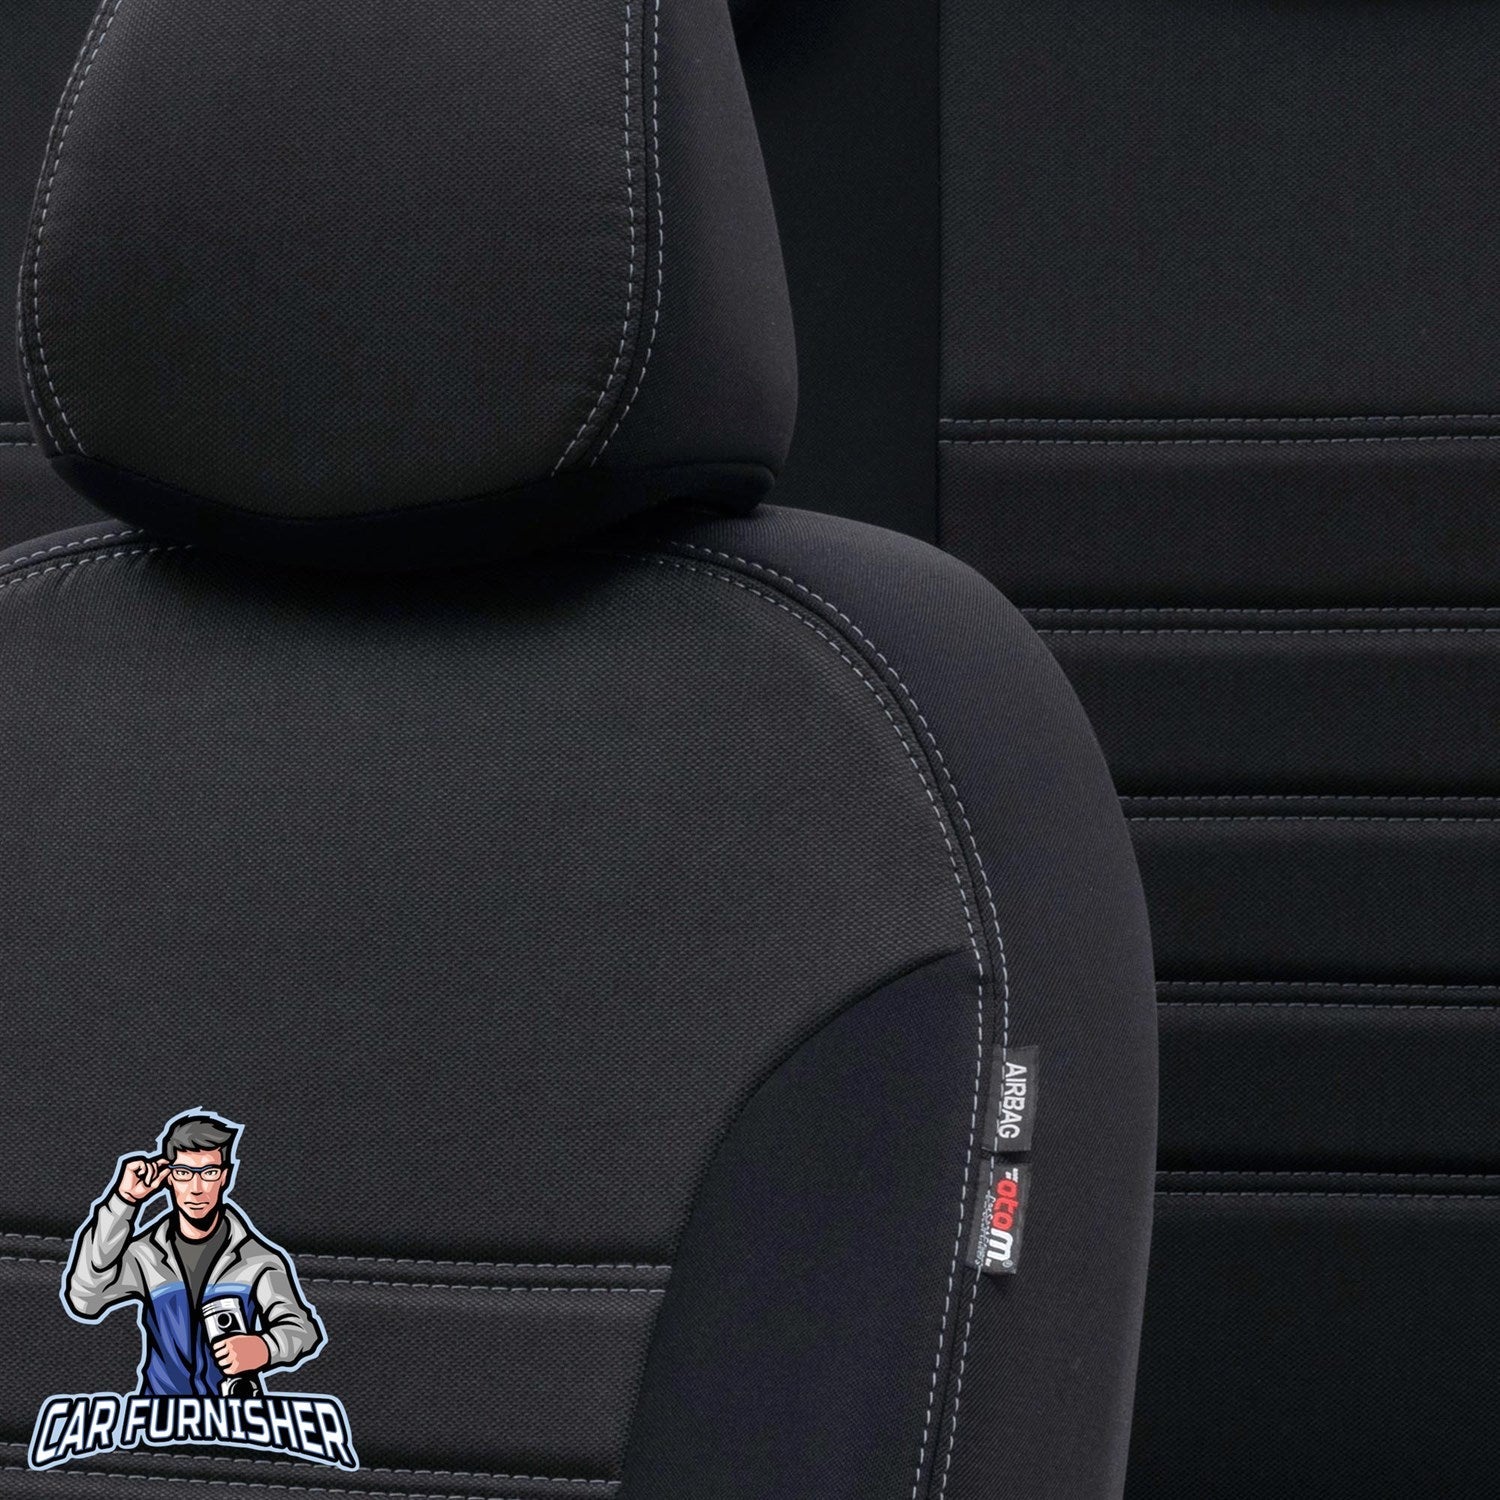 Volvo S90 Seat Cover Original Jacquard Design Black Jacquard Fabric